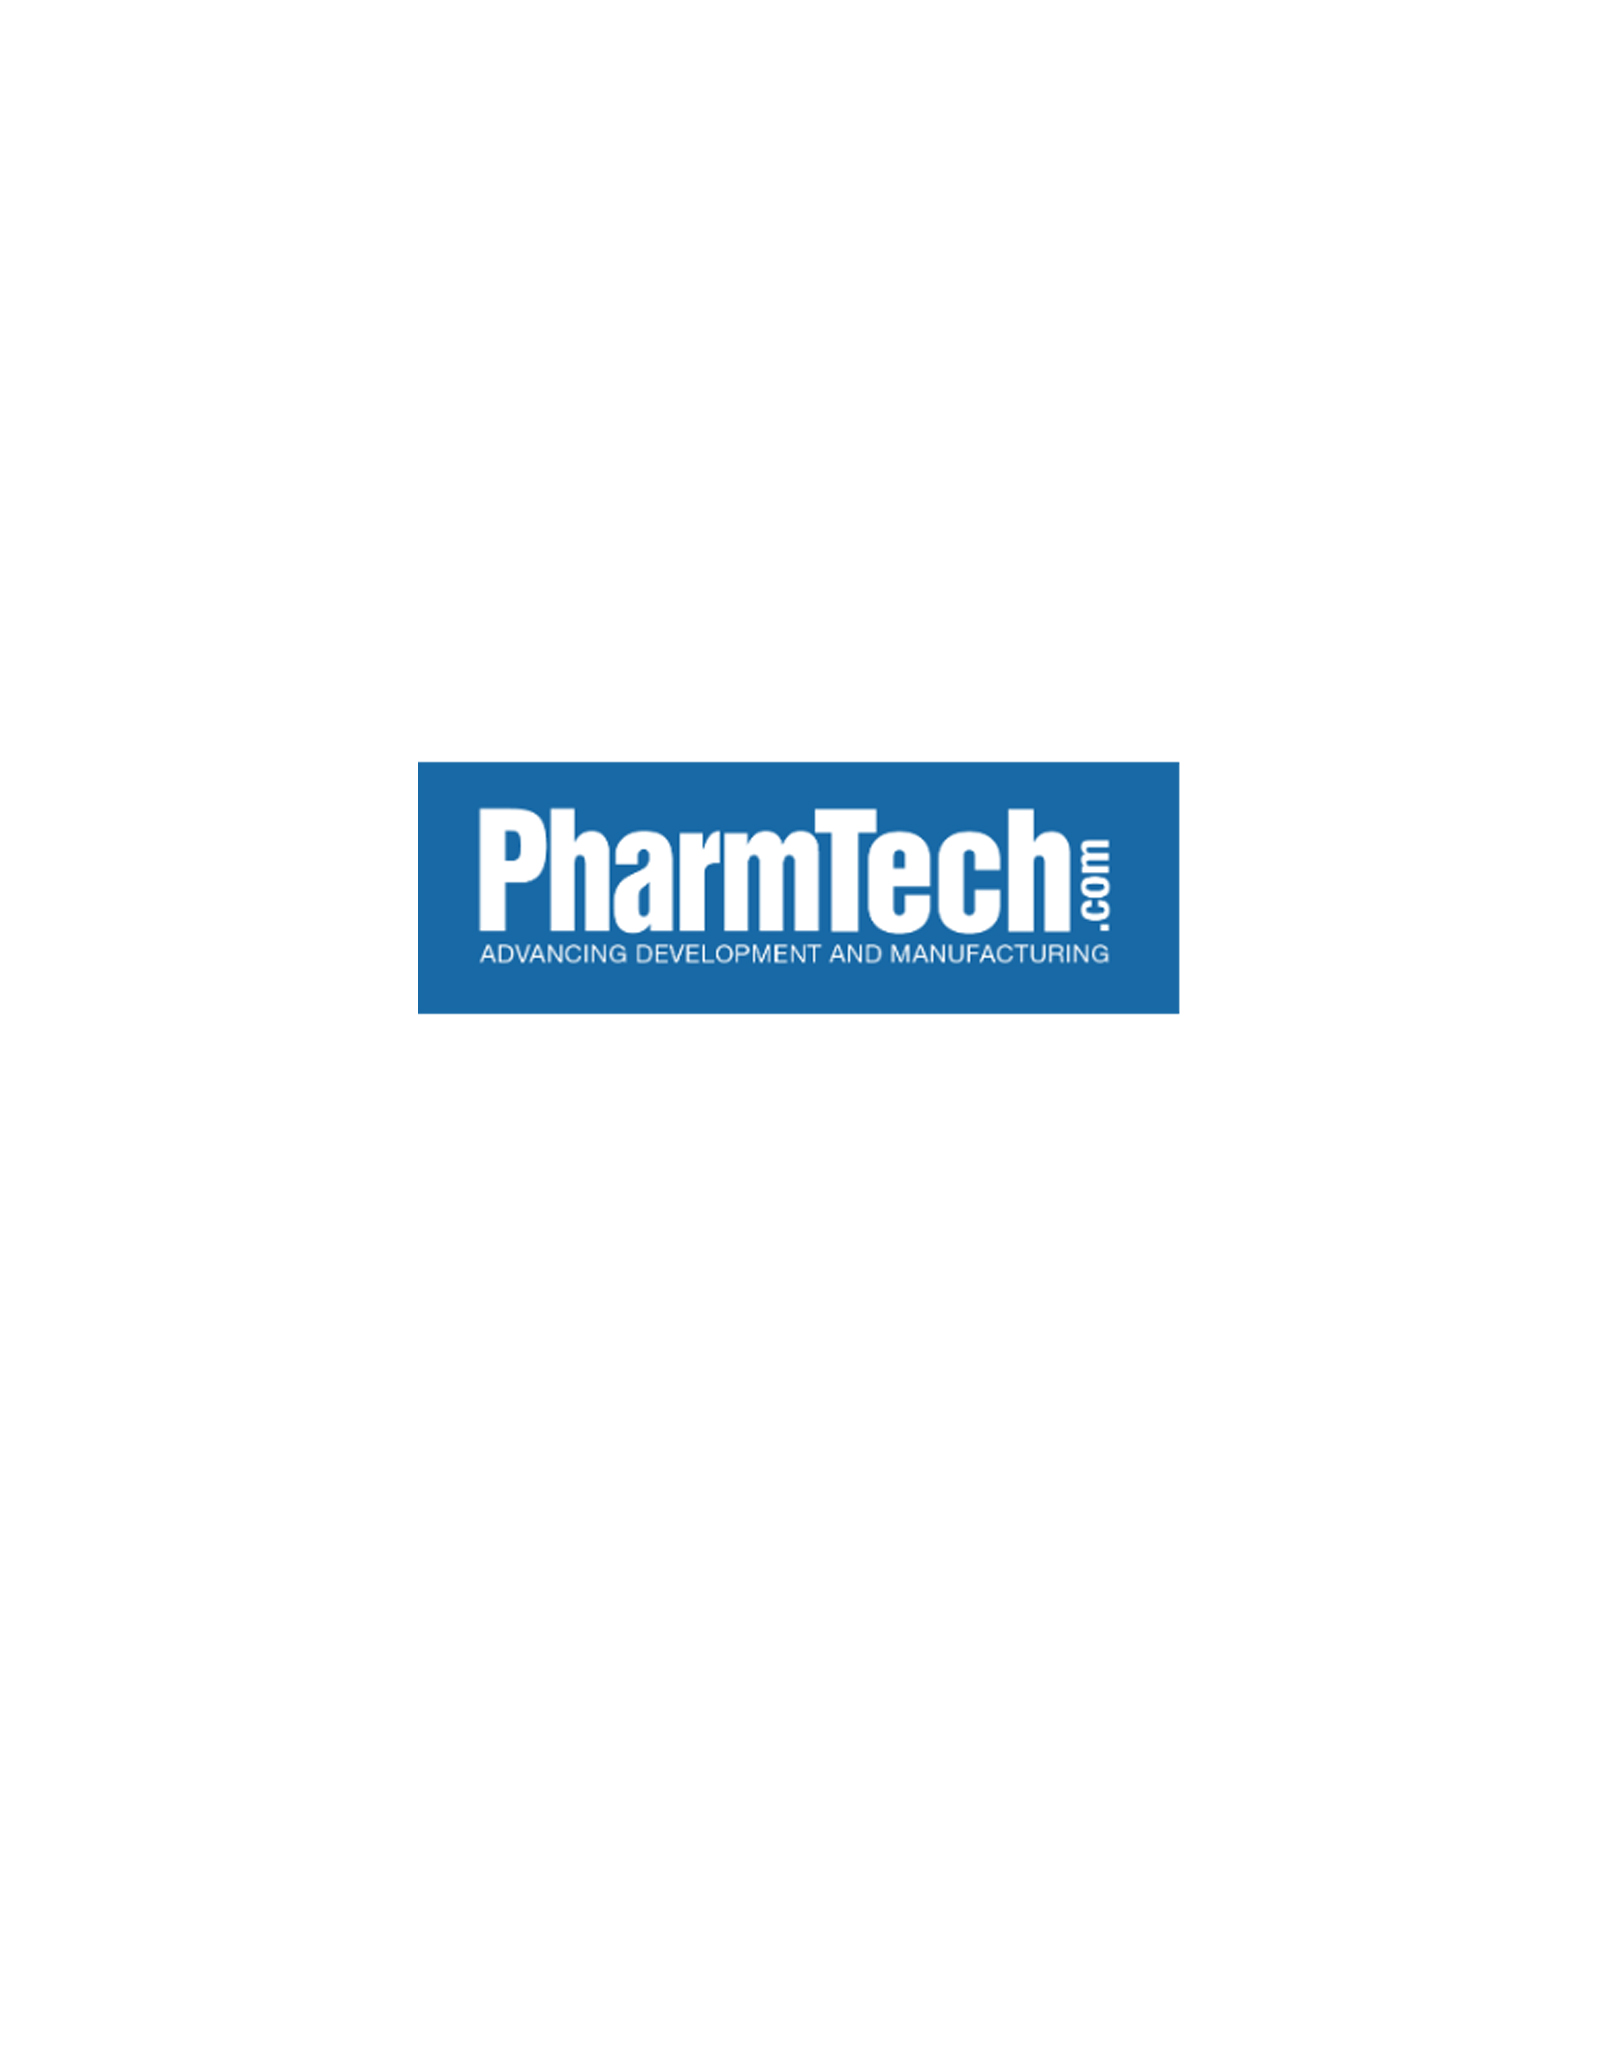 pharma tech logo